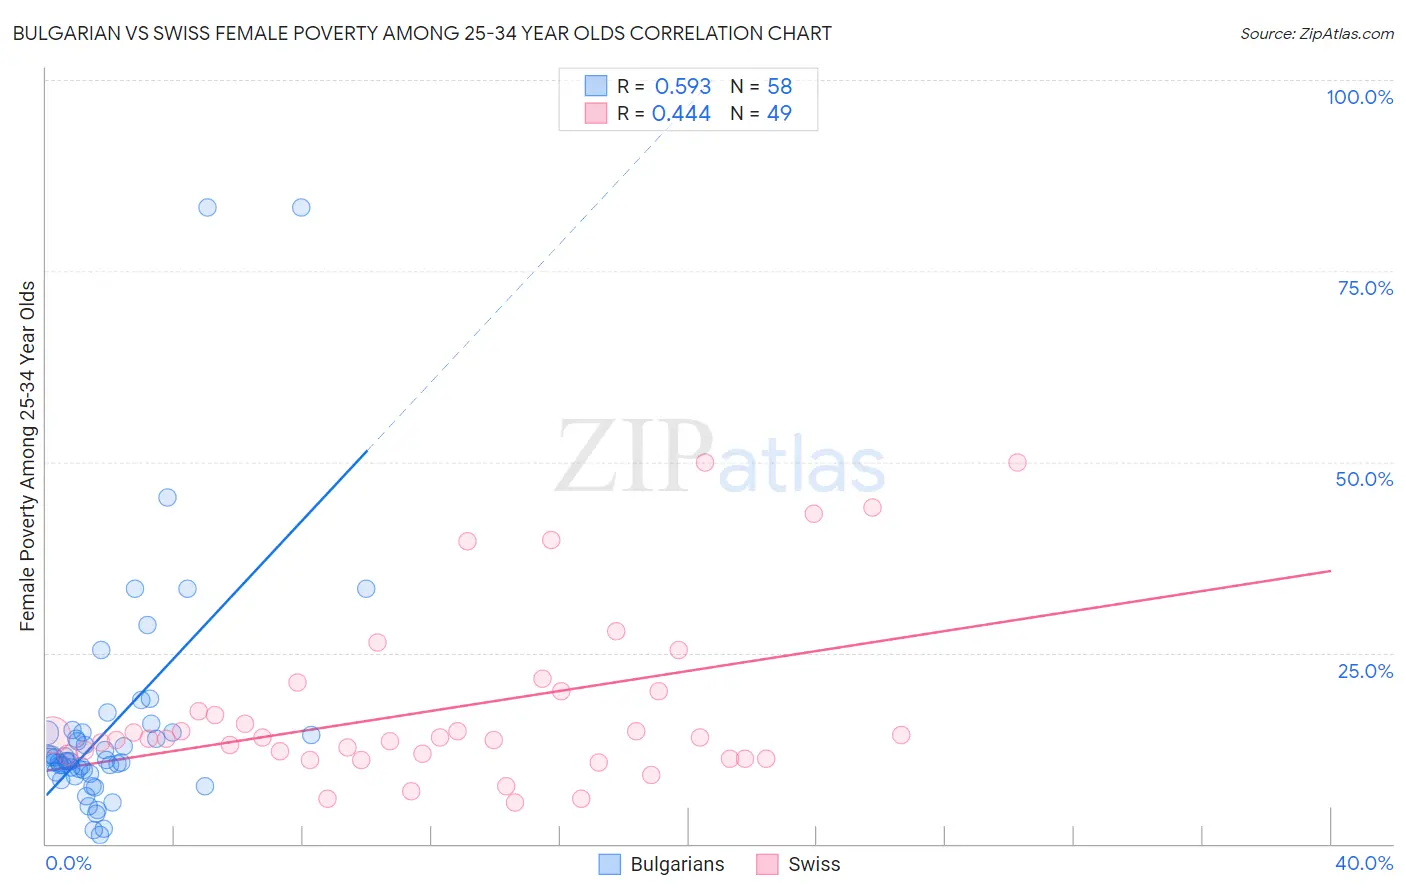 Bulgarian vs Swiss Female Poverty Among 25-34 Year Olds